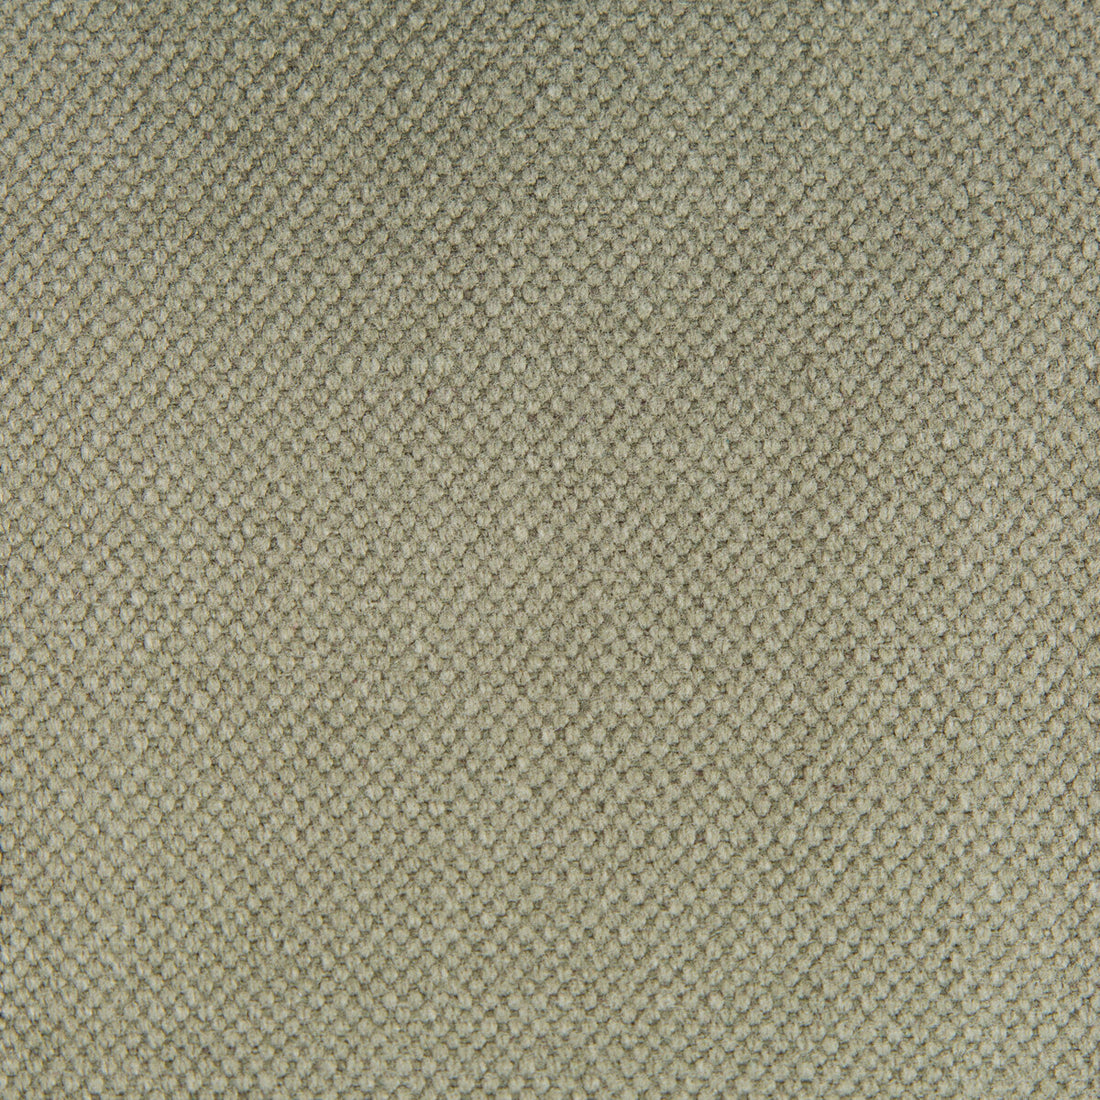 Lima fabric in lino color - pattern GDT5616.032.0 - by Gaston y Daniela in the Gaston Nuevo Mundo collection